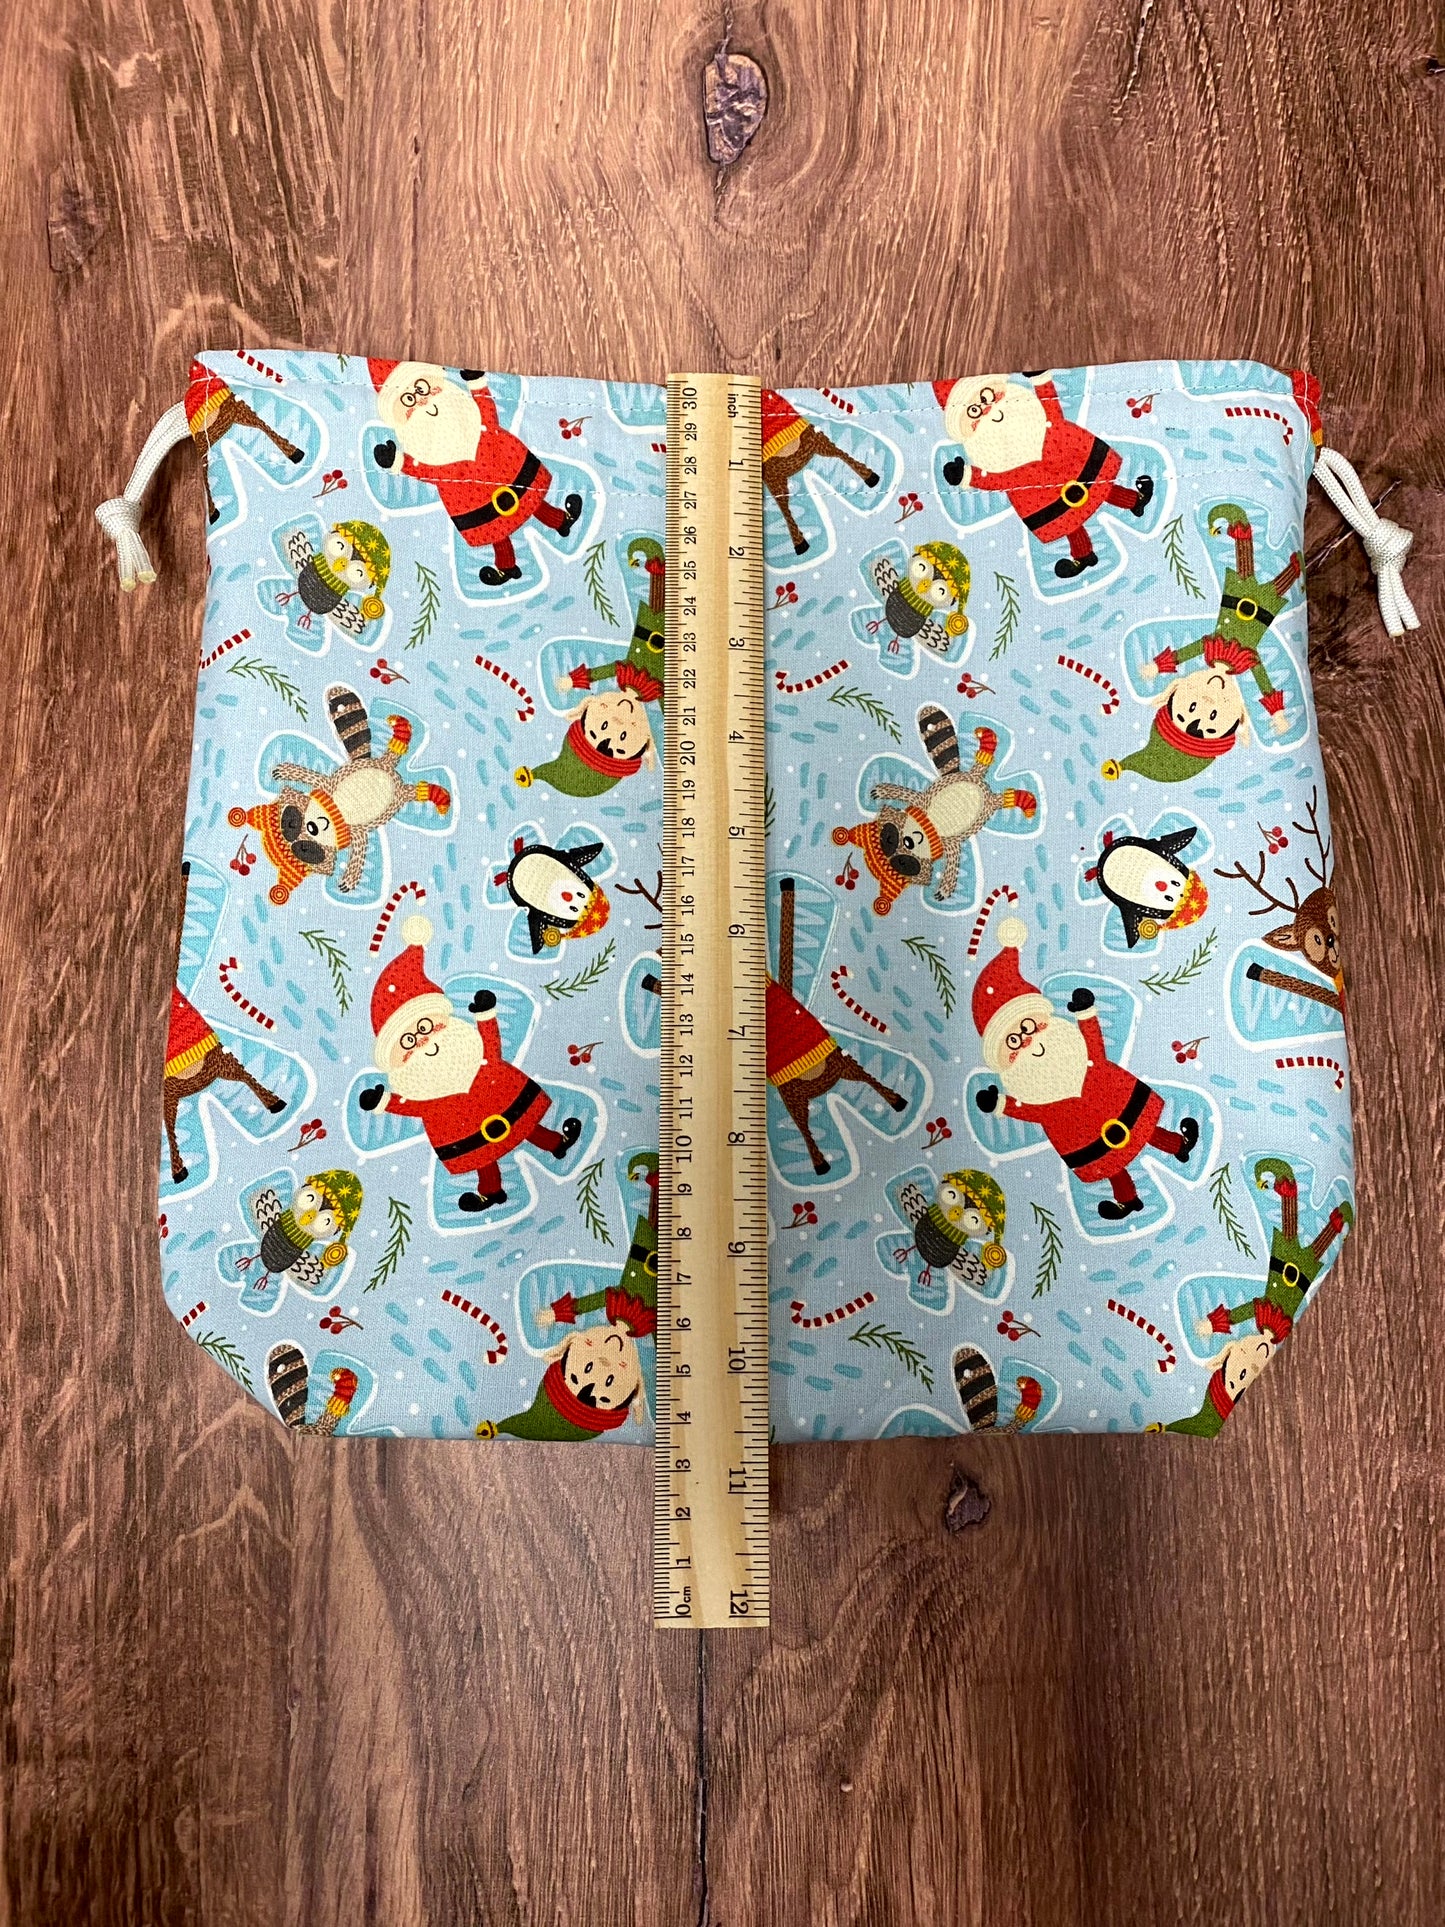 Christmas Project Bag - Drawstring Bag – Knitting Bag – Crochet Bag - Toy Sack – Cross Stitch Bag - Reindeer - Santa - Elf - Owl - Penguin